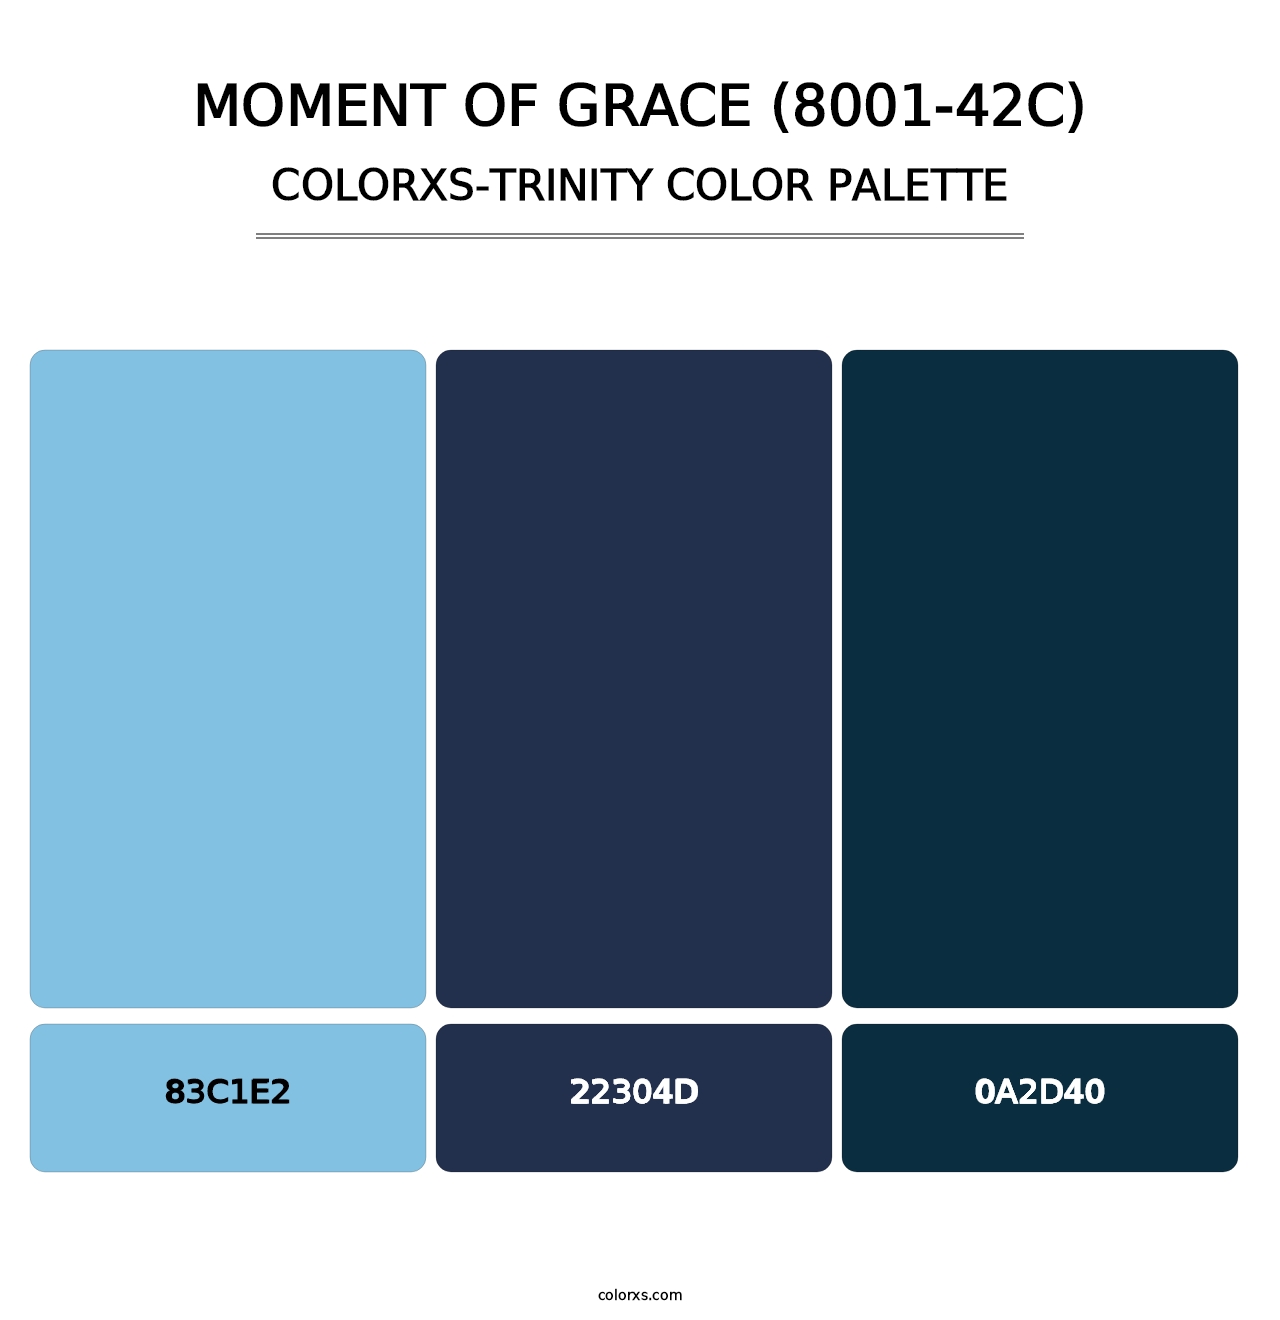 Moment of Grace (8001-42C) - Colorxs Trinity Palette